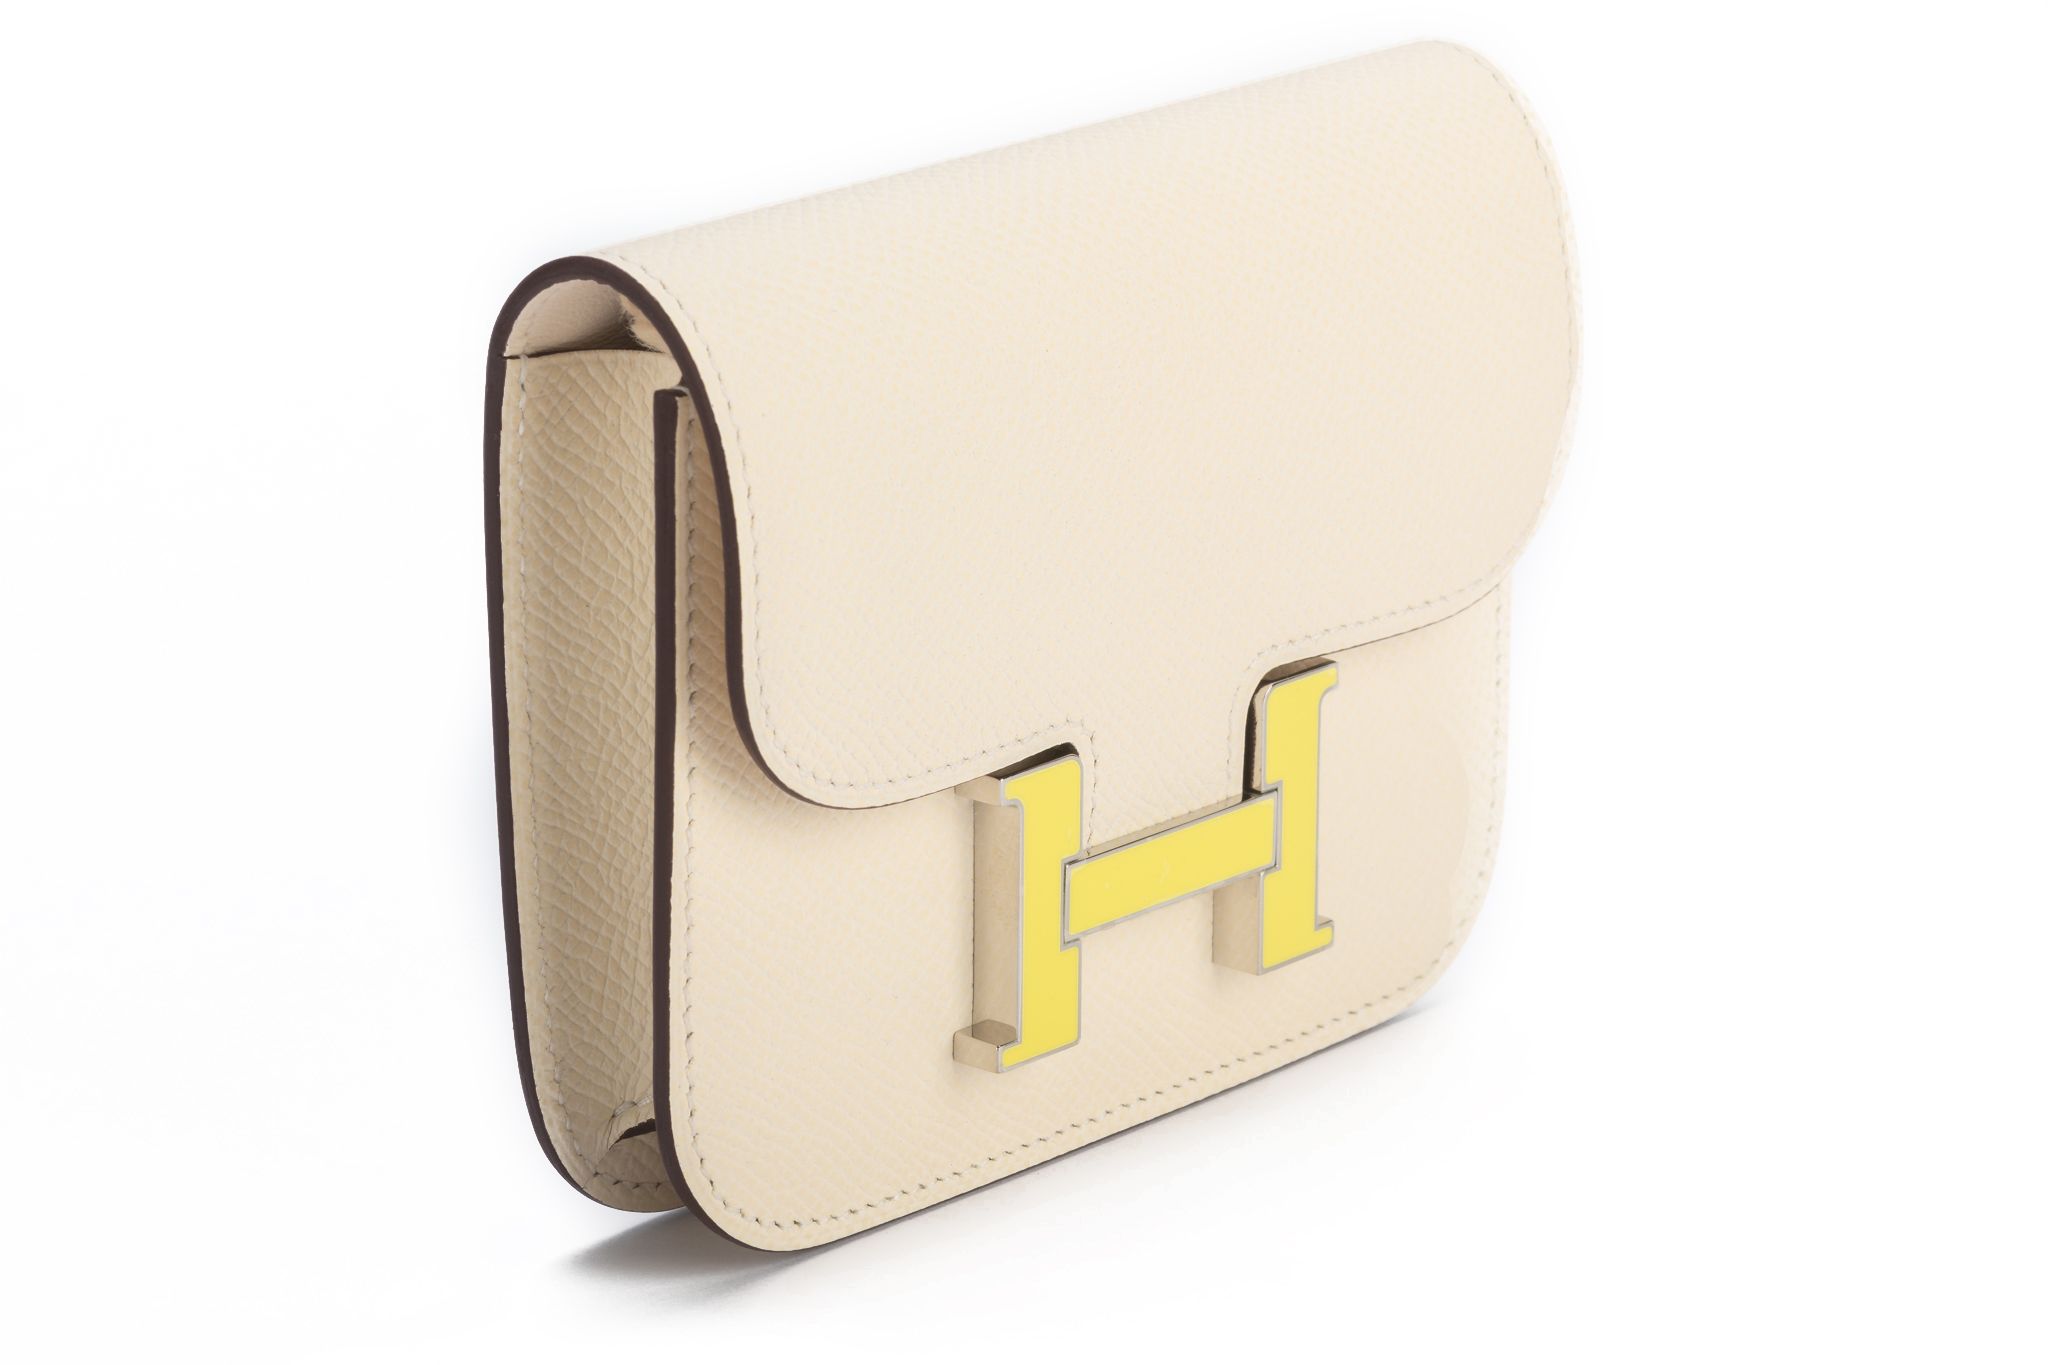 Hermès Constance Slim Compact Handbag